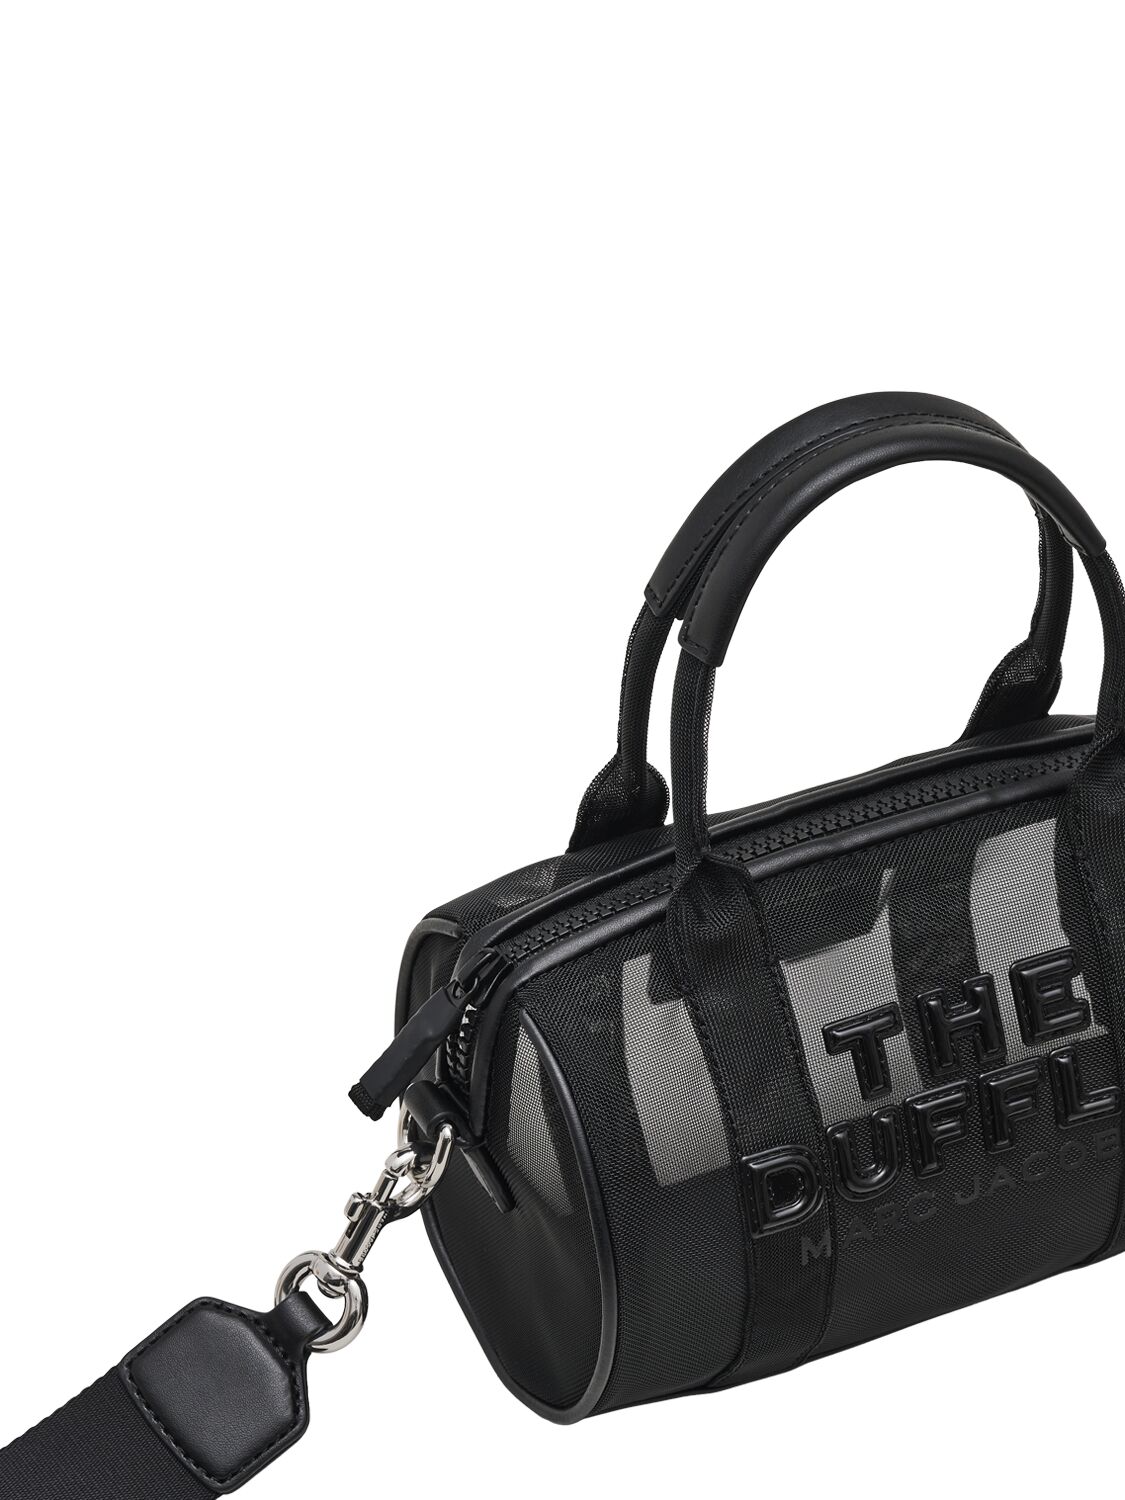 Shop Marc Jacobs The Mini Duffle Nylon Bag In Blackout